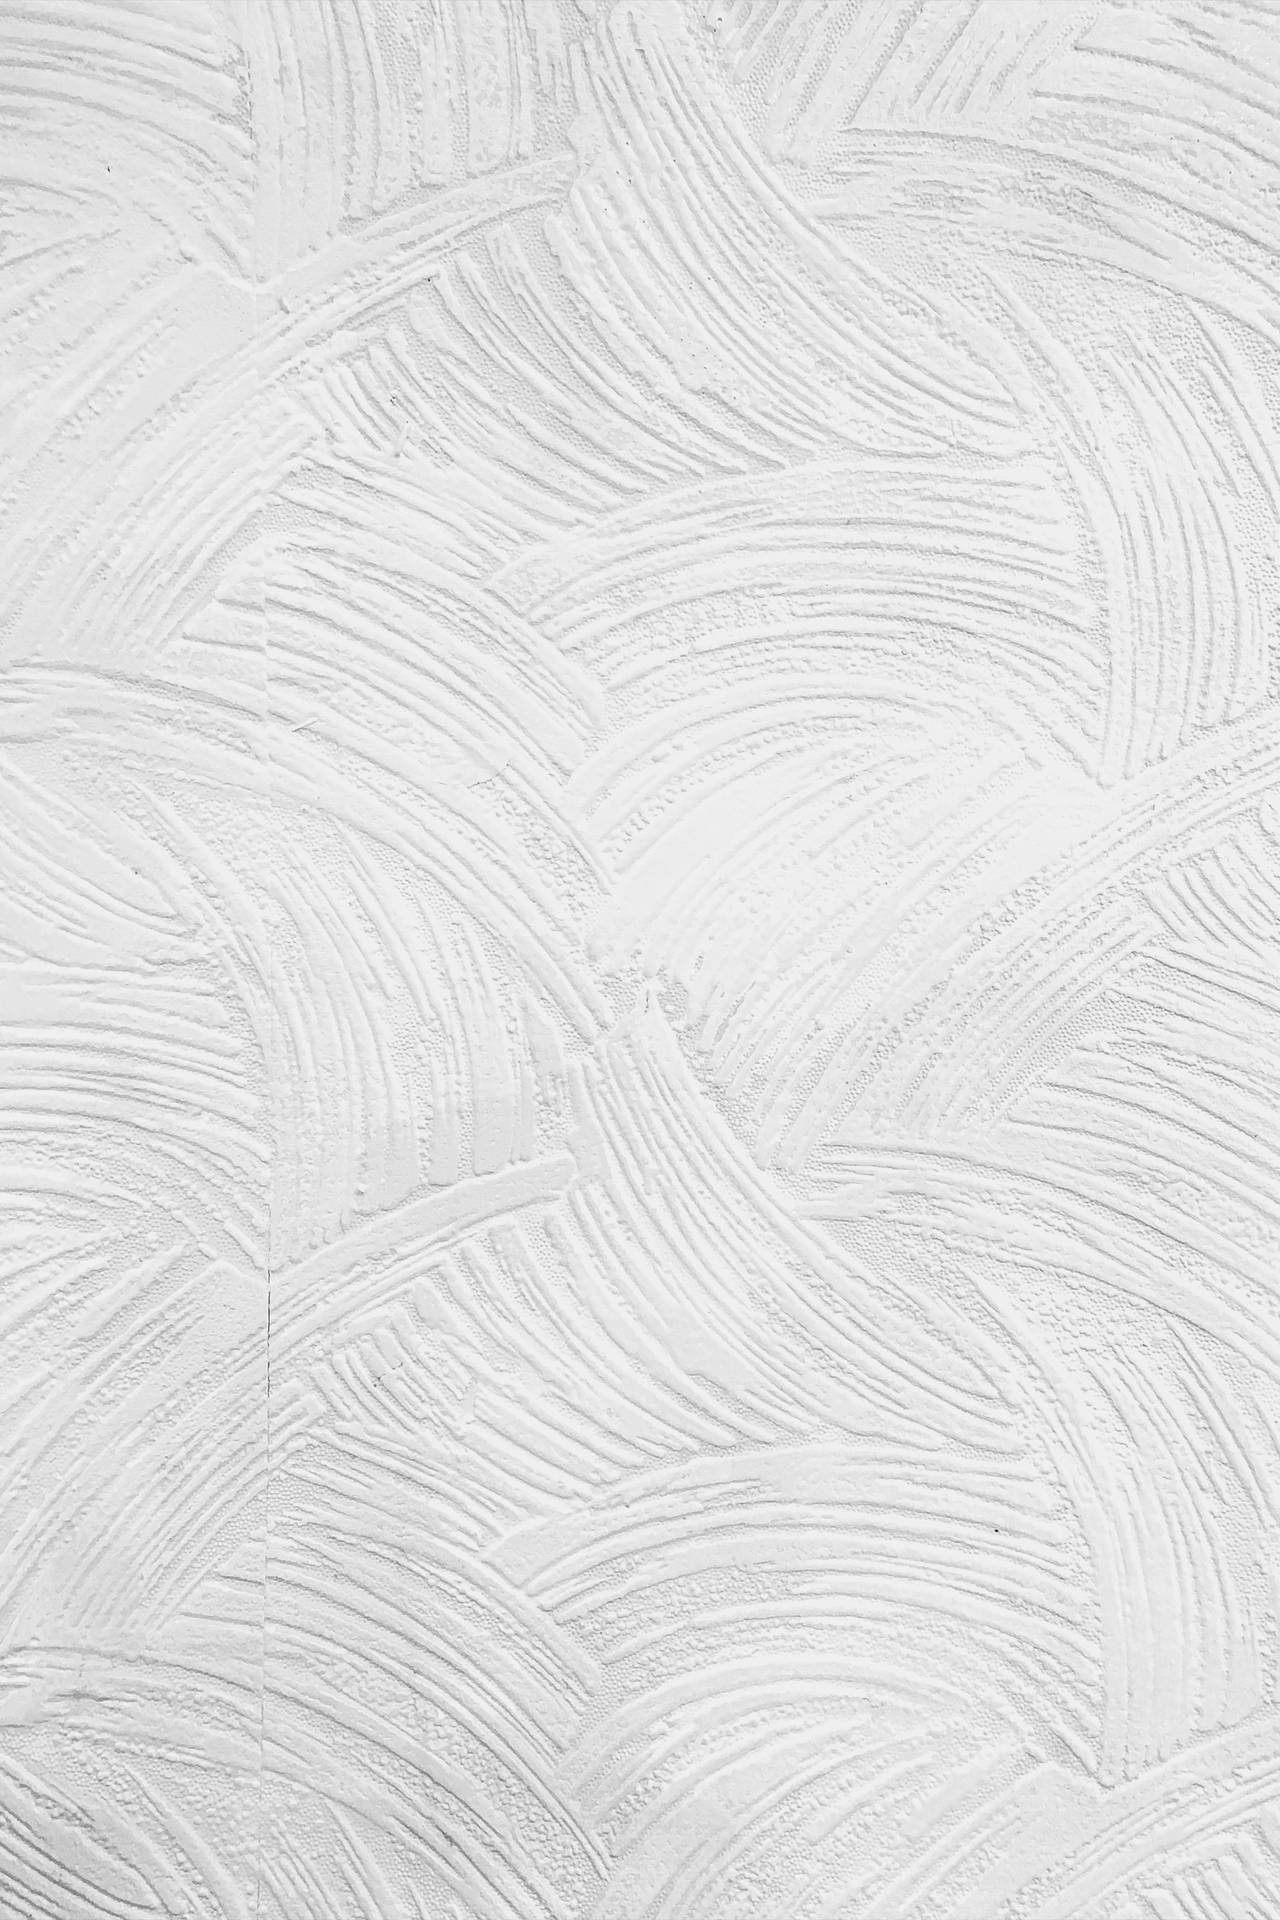 Texture Rough White Wall Wallpaper